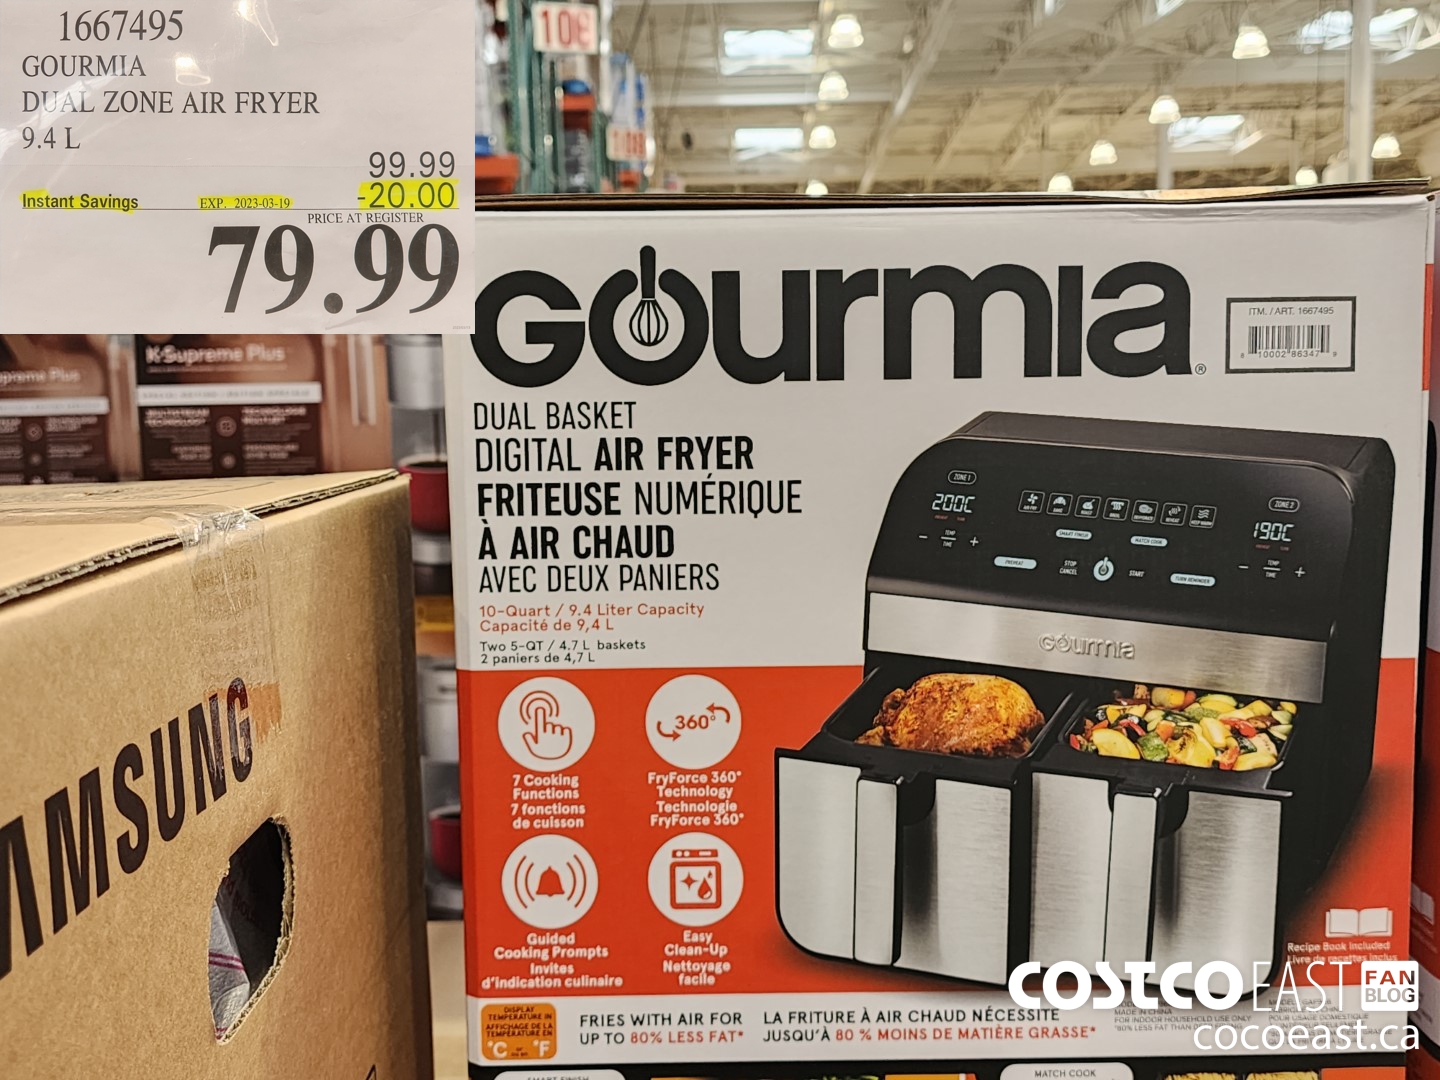 Gourmia Digital Air Fryer from $46.99 Shipped on Costco.com